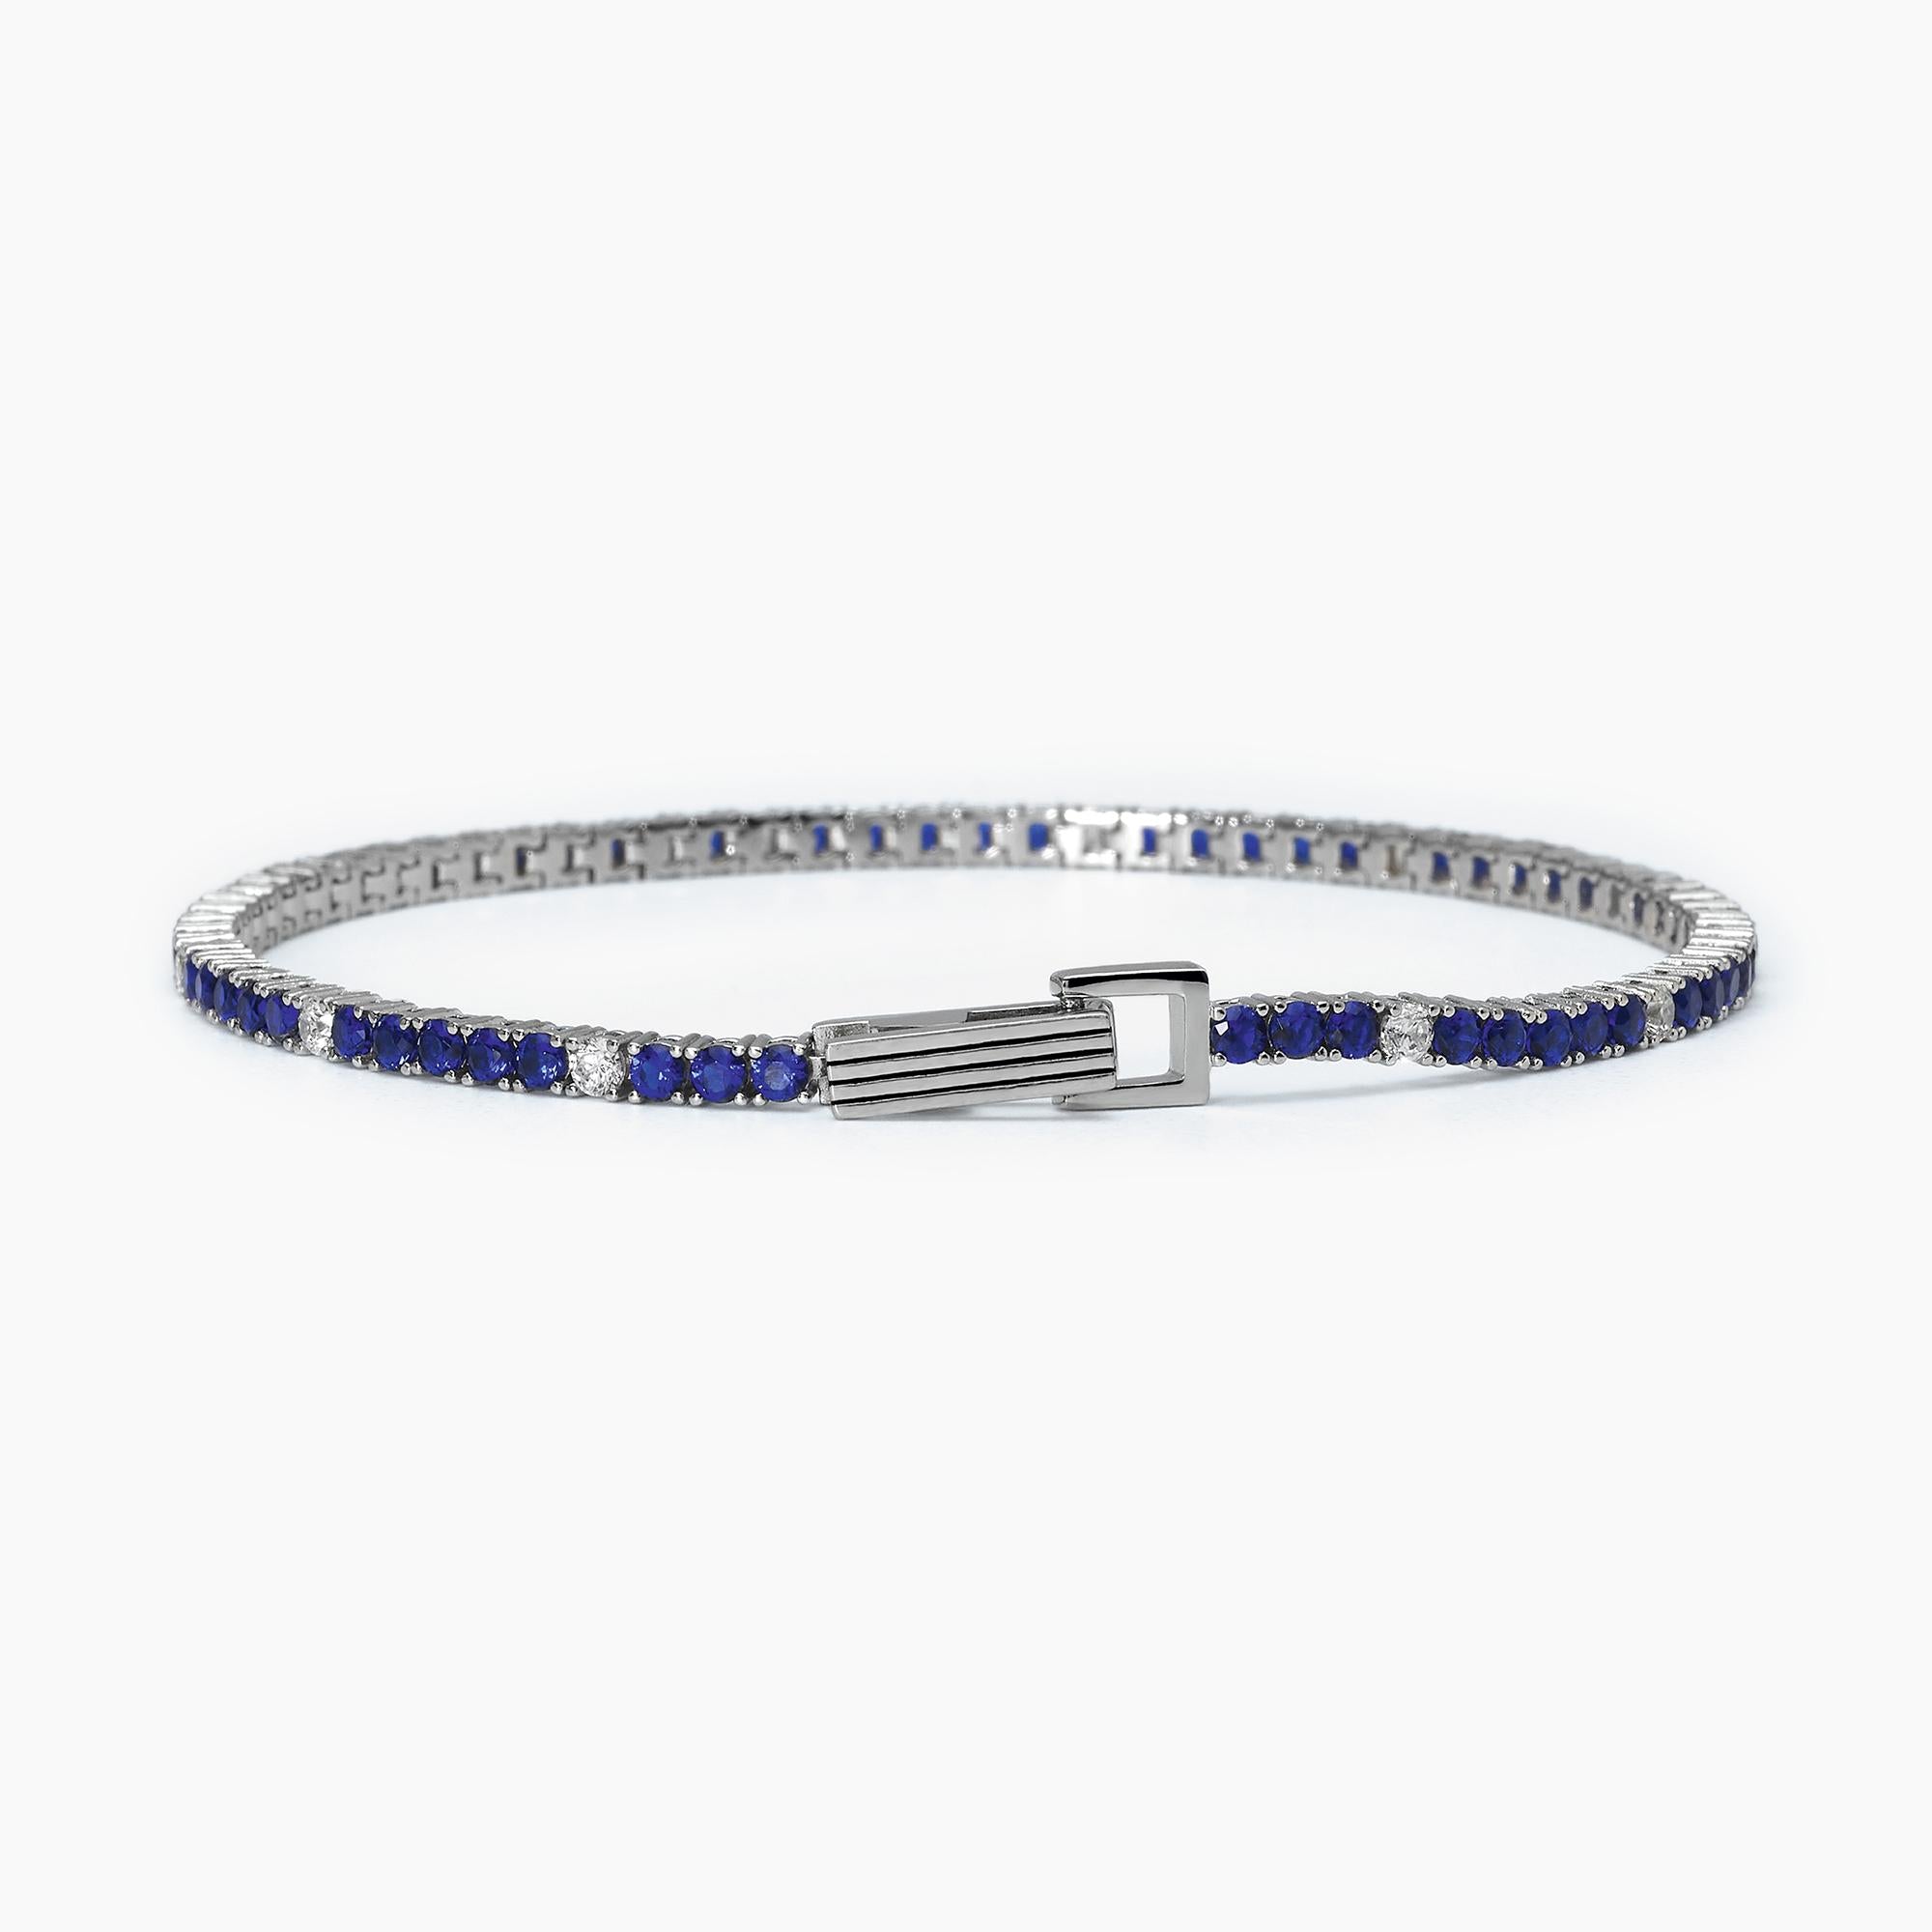 Mabina Homme - Bracelet tennis bleu TENNIS CLUB - 533701-S